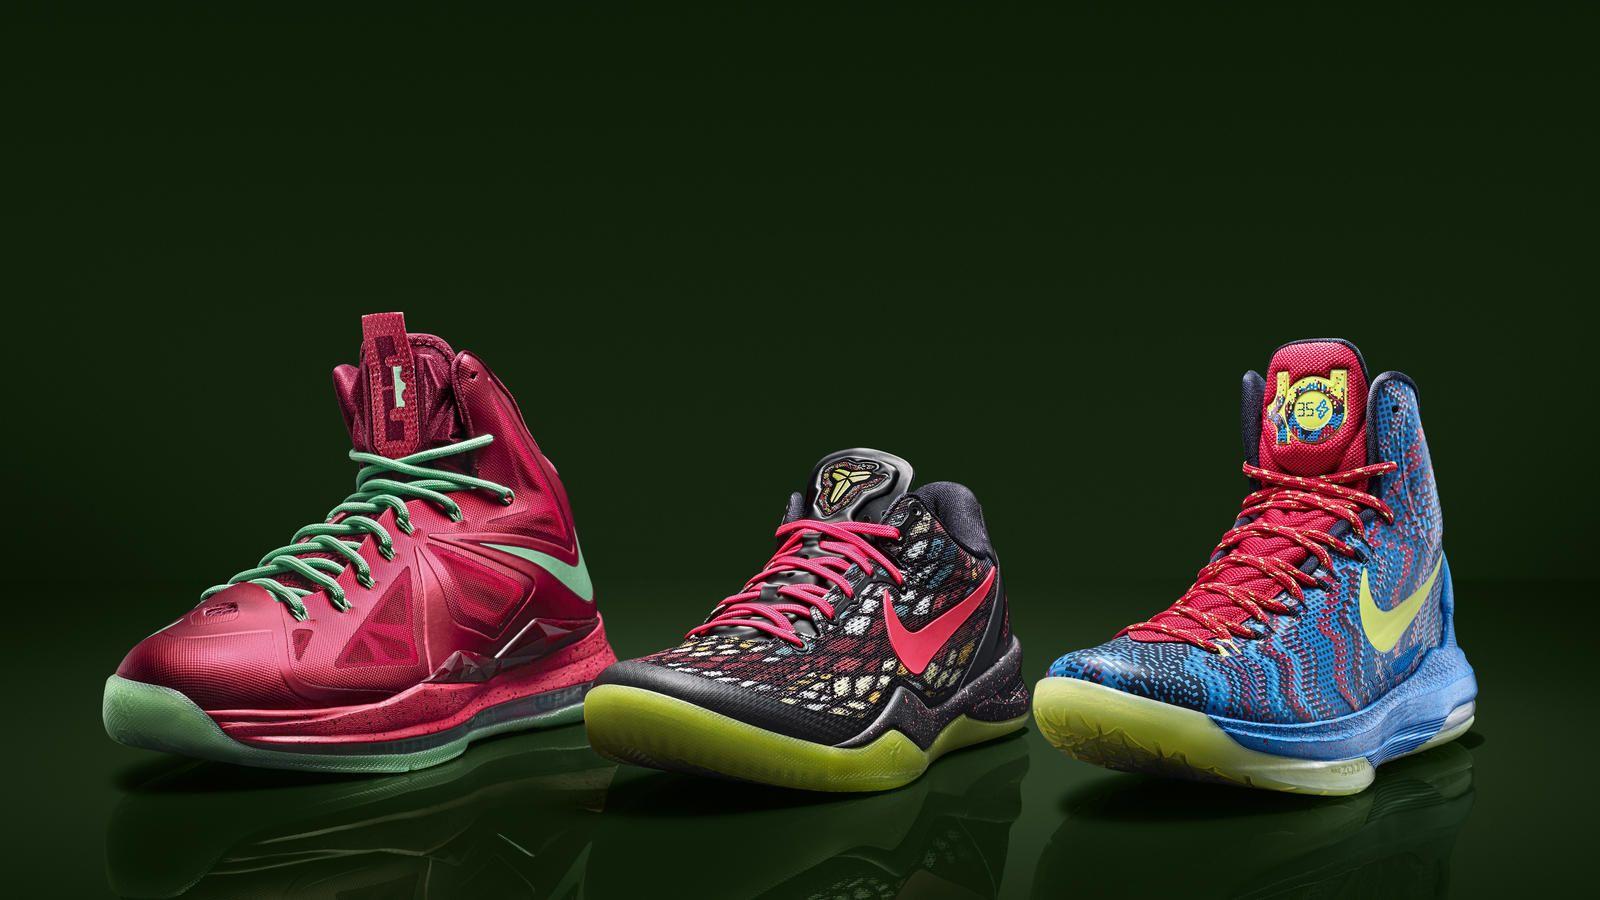 Tis the season for festive Nike Basketball signature footwear